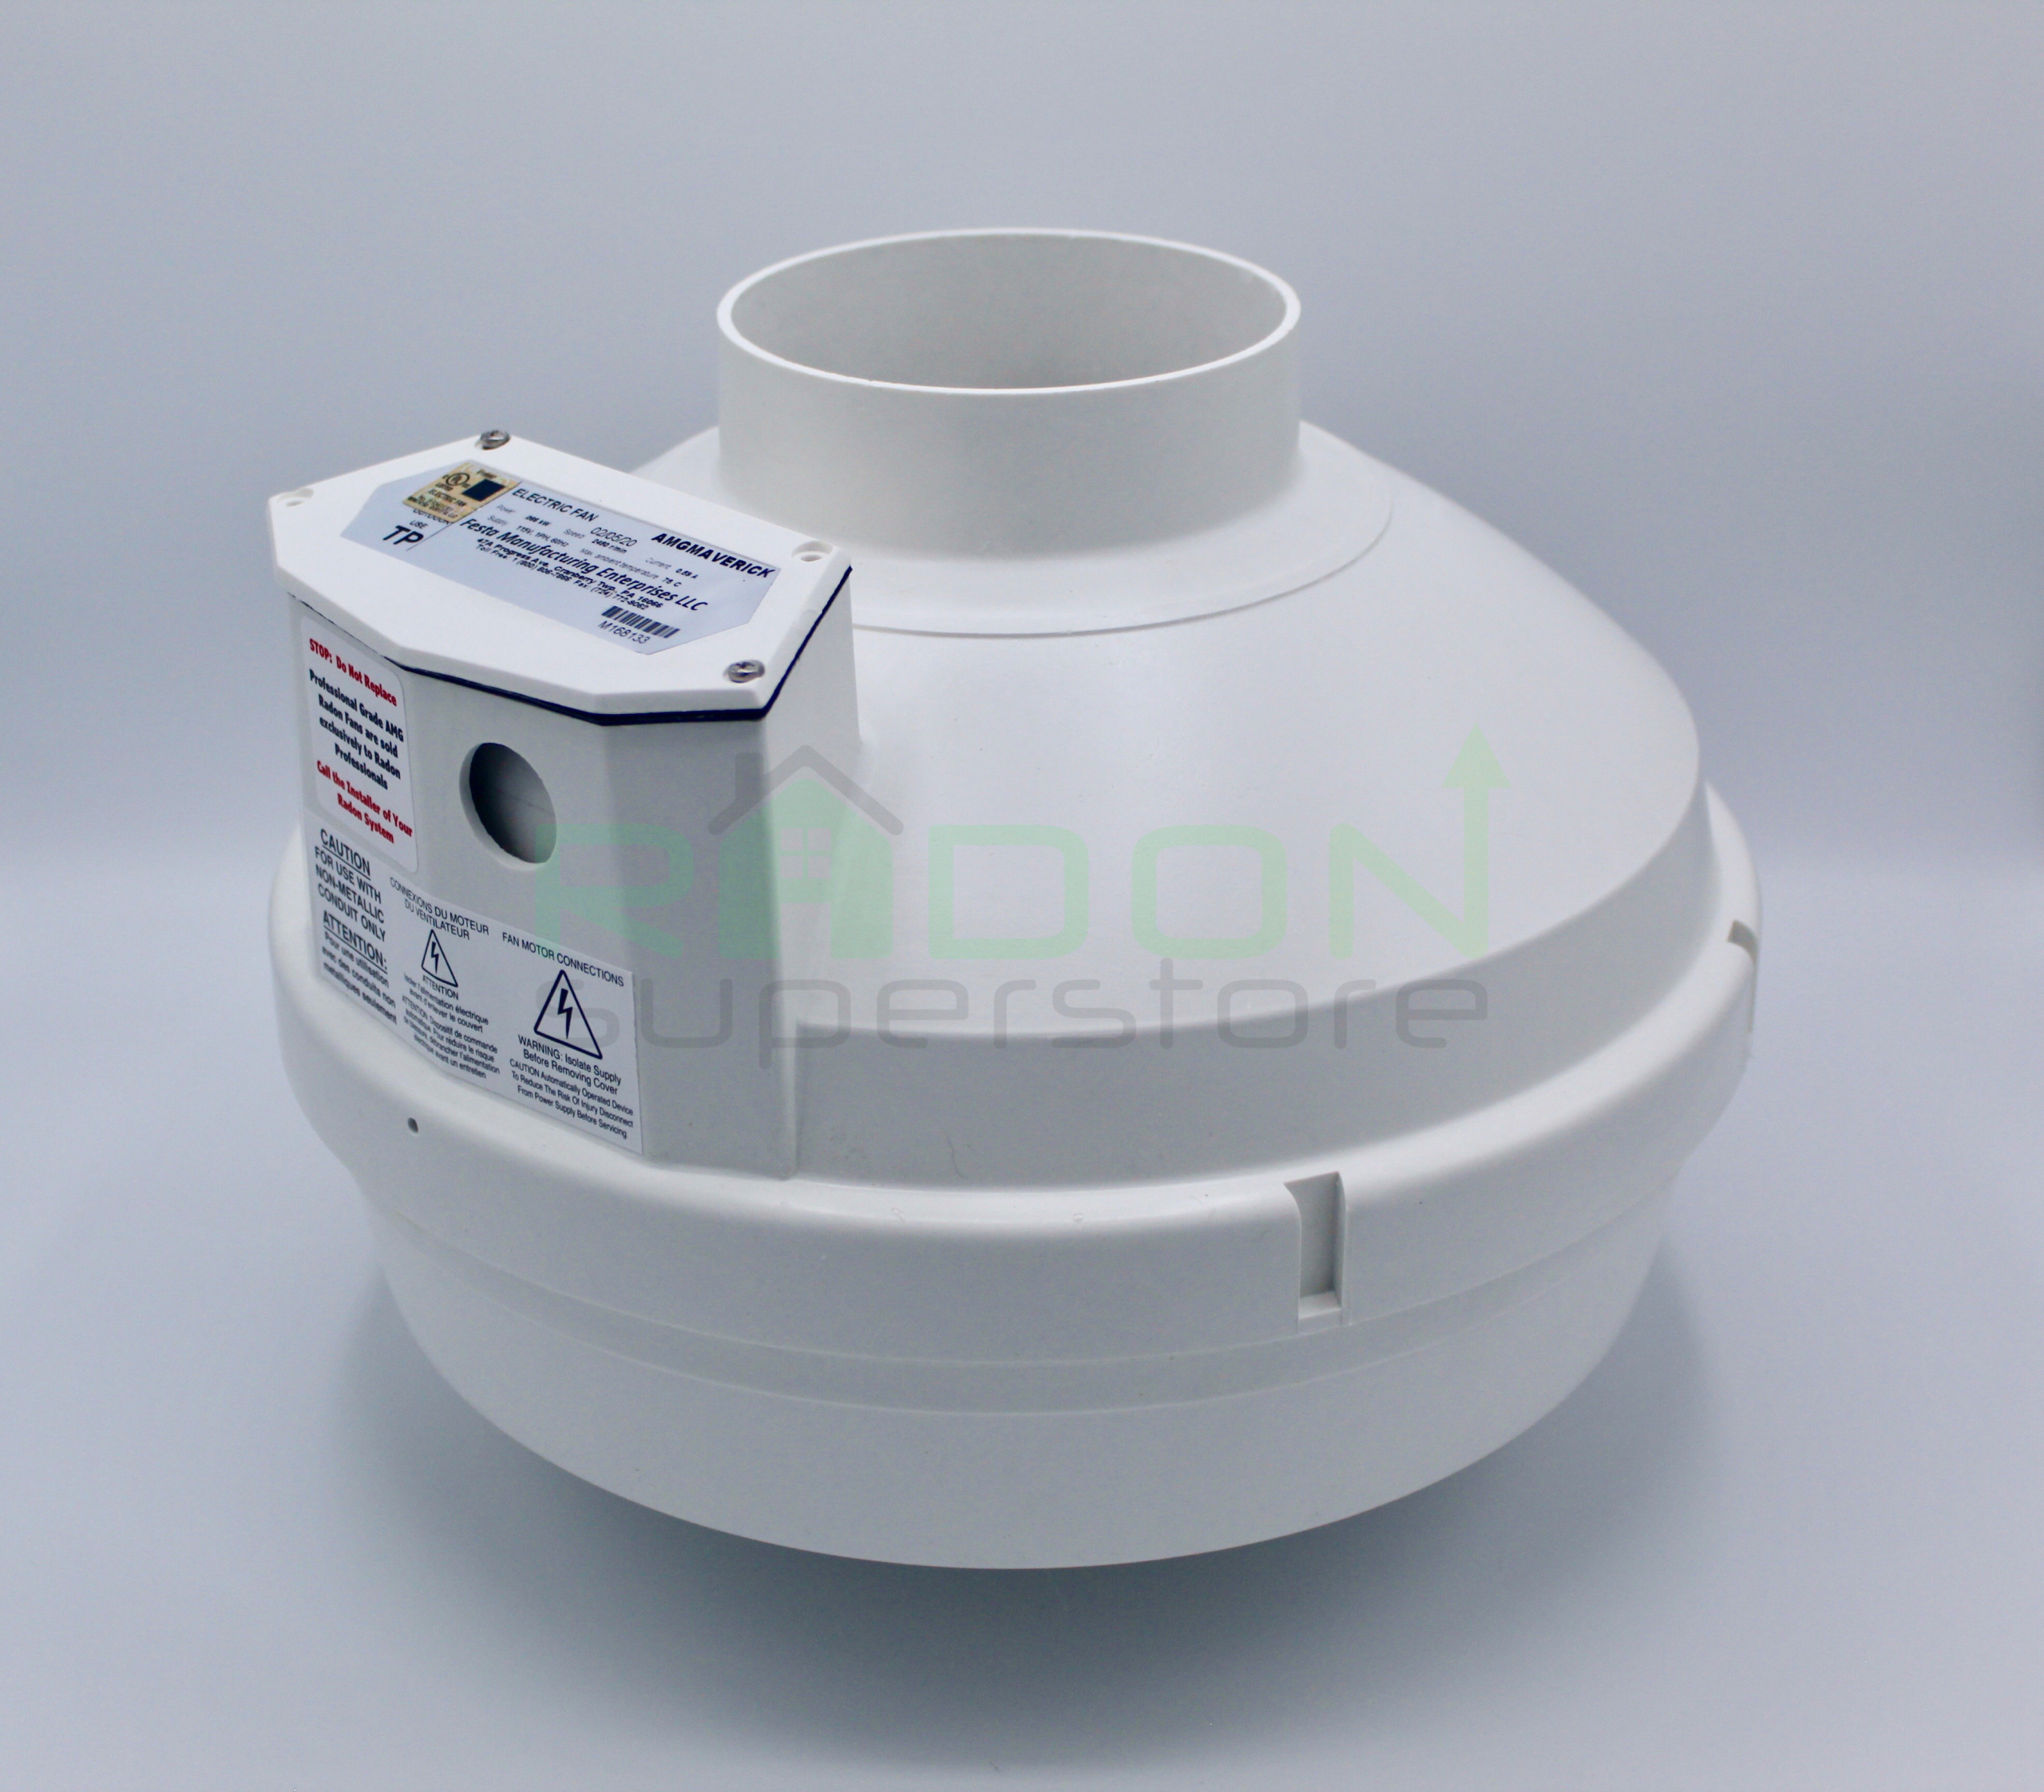 Details about   Festa Amg MAVERICK Radon Mitigation Fan HIGHEST Durability 4 inch/German Motor 